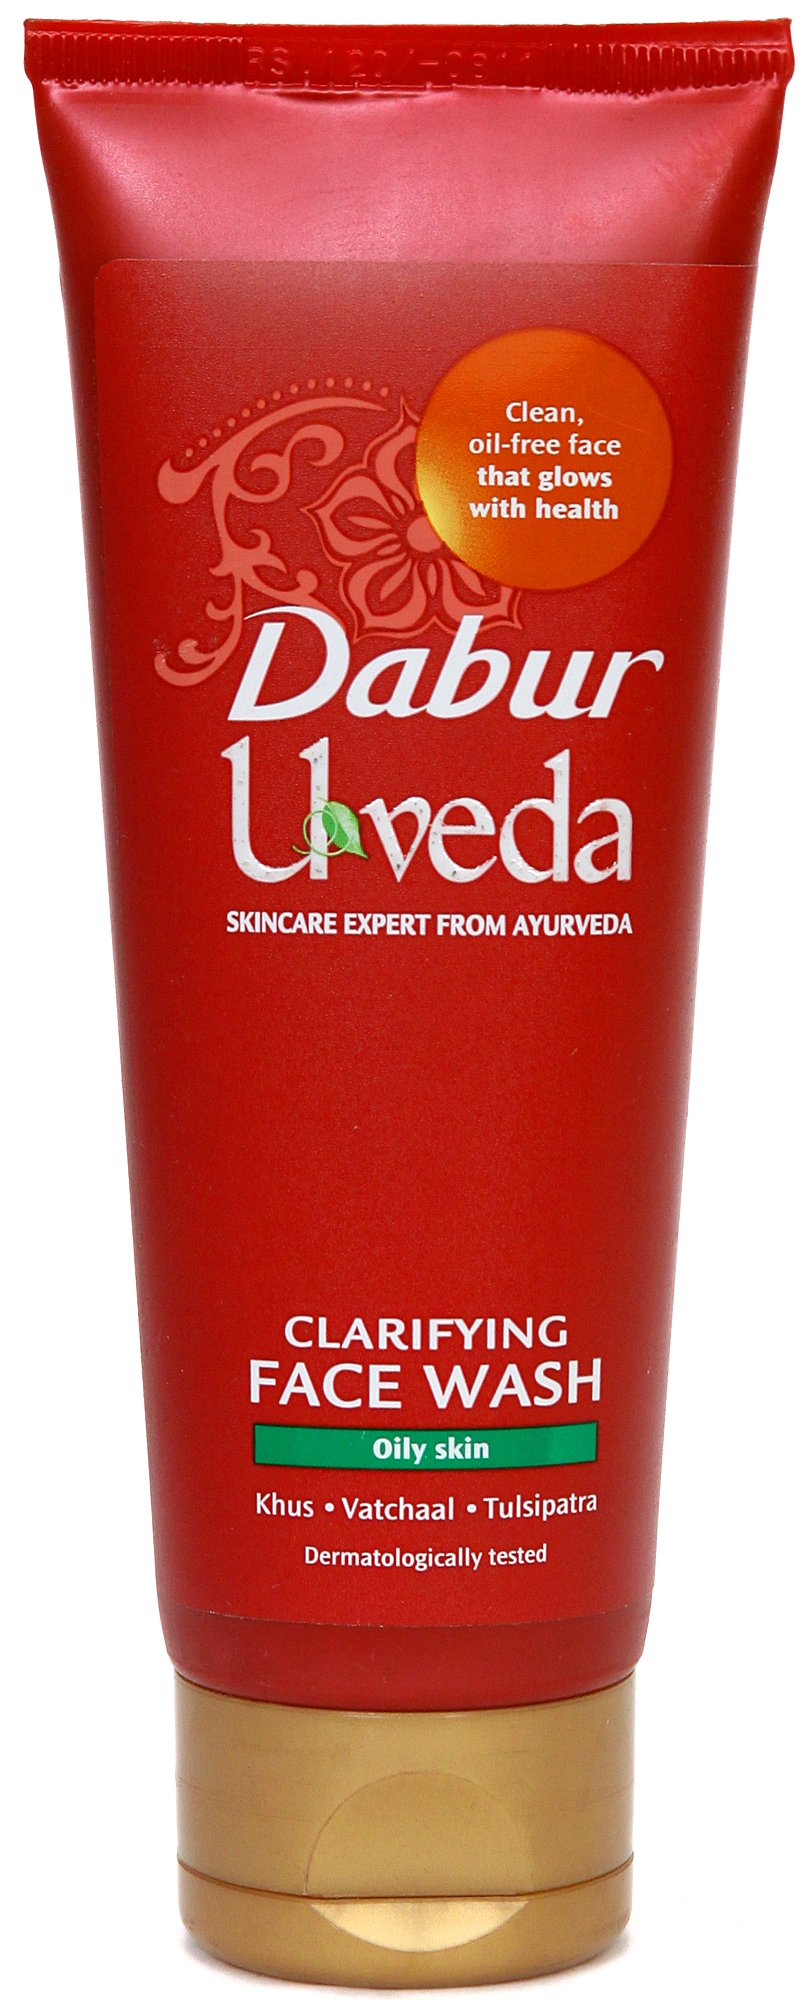 Dabur Uveda Clarifying Facewash - book cover